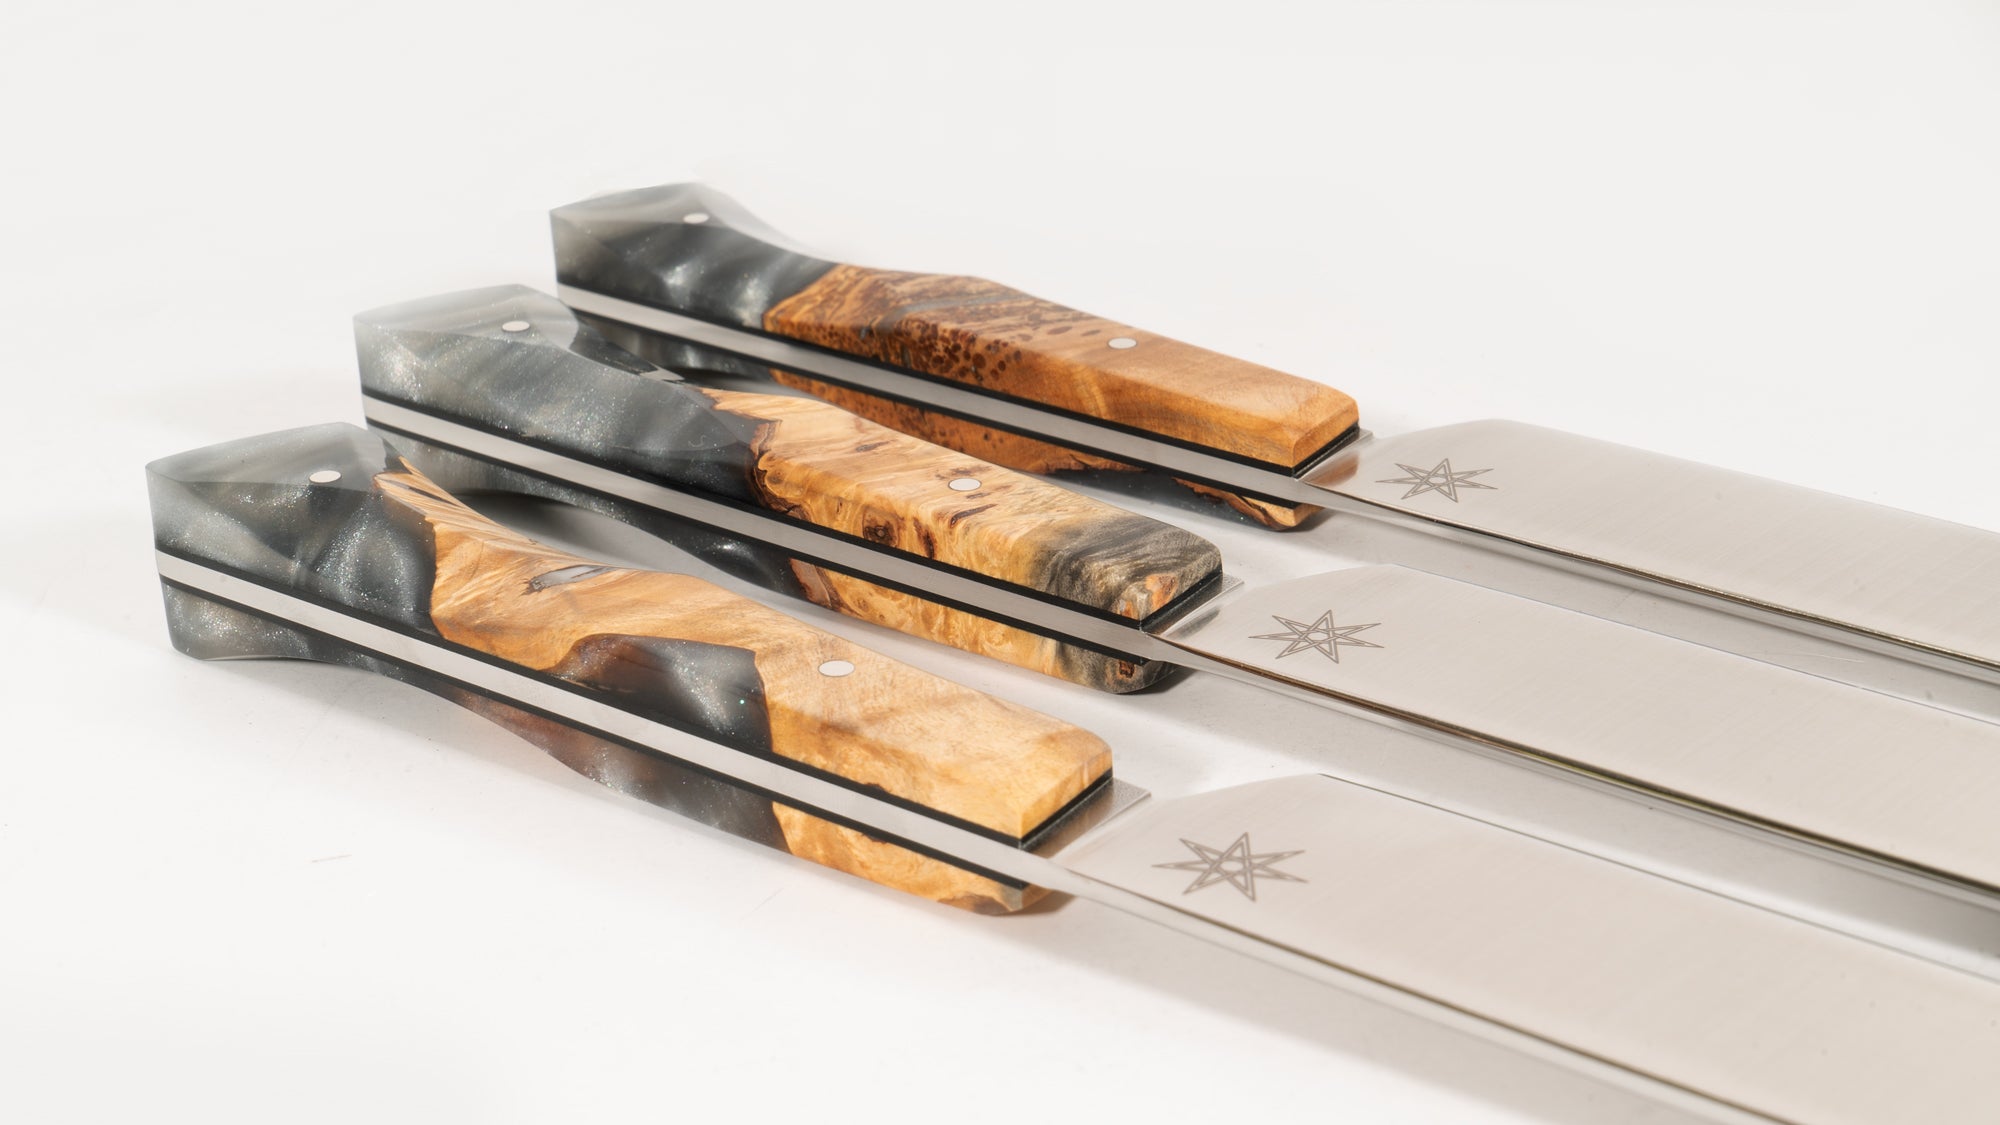 Detail photo of Town Cutler Ag 47 Slicer Carving Knife Handles.